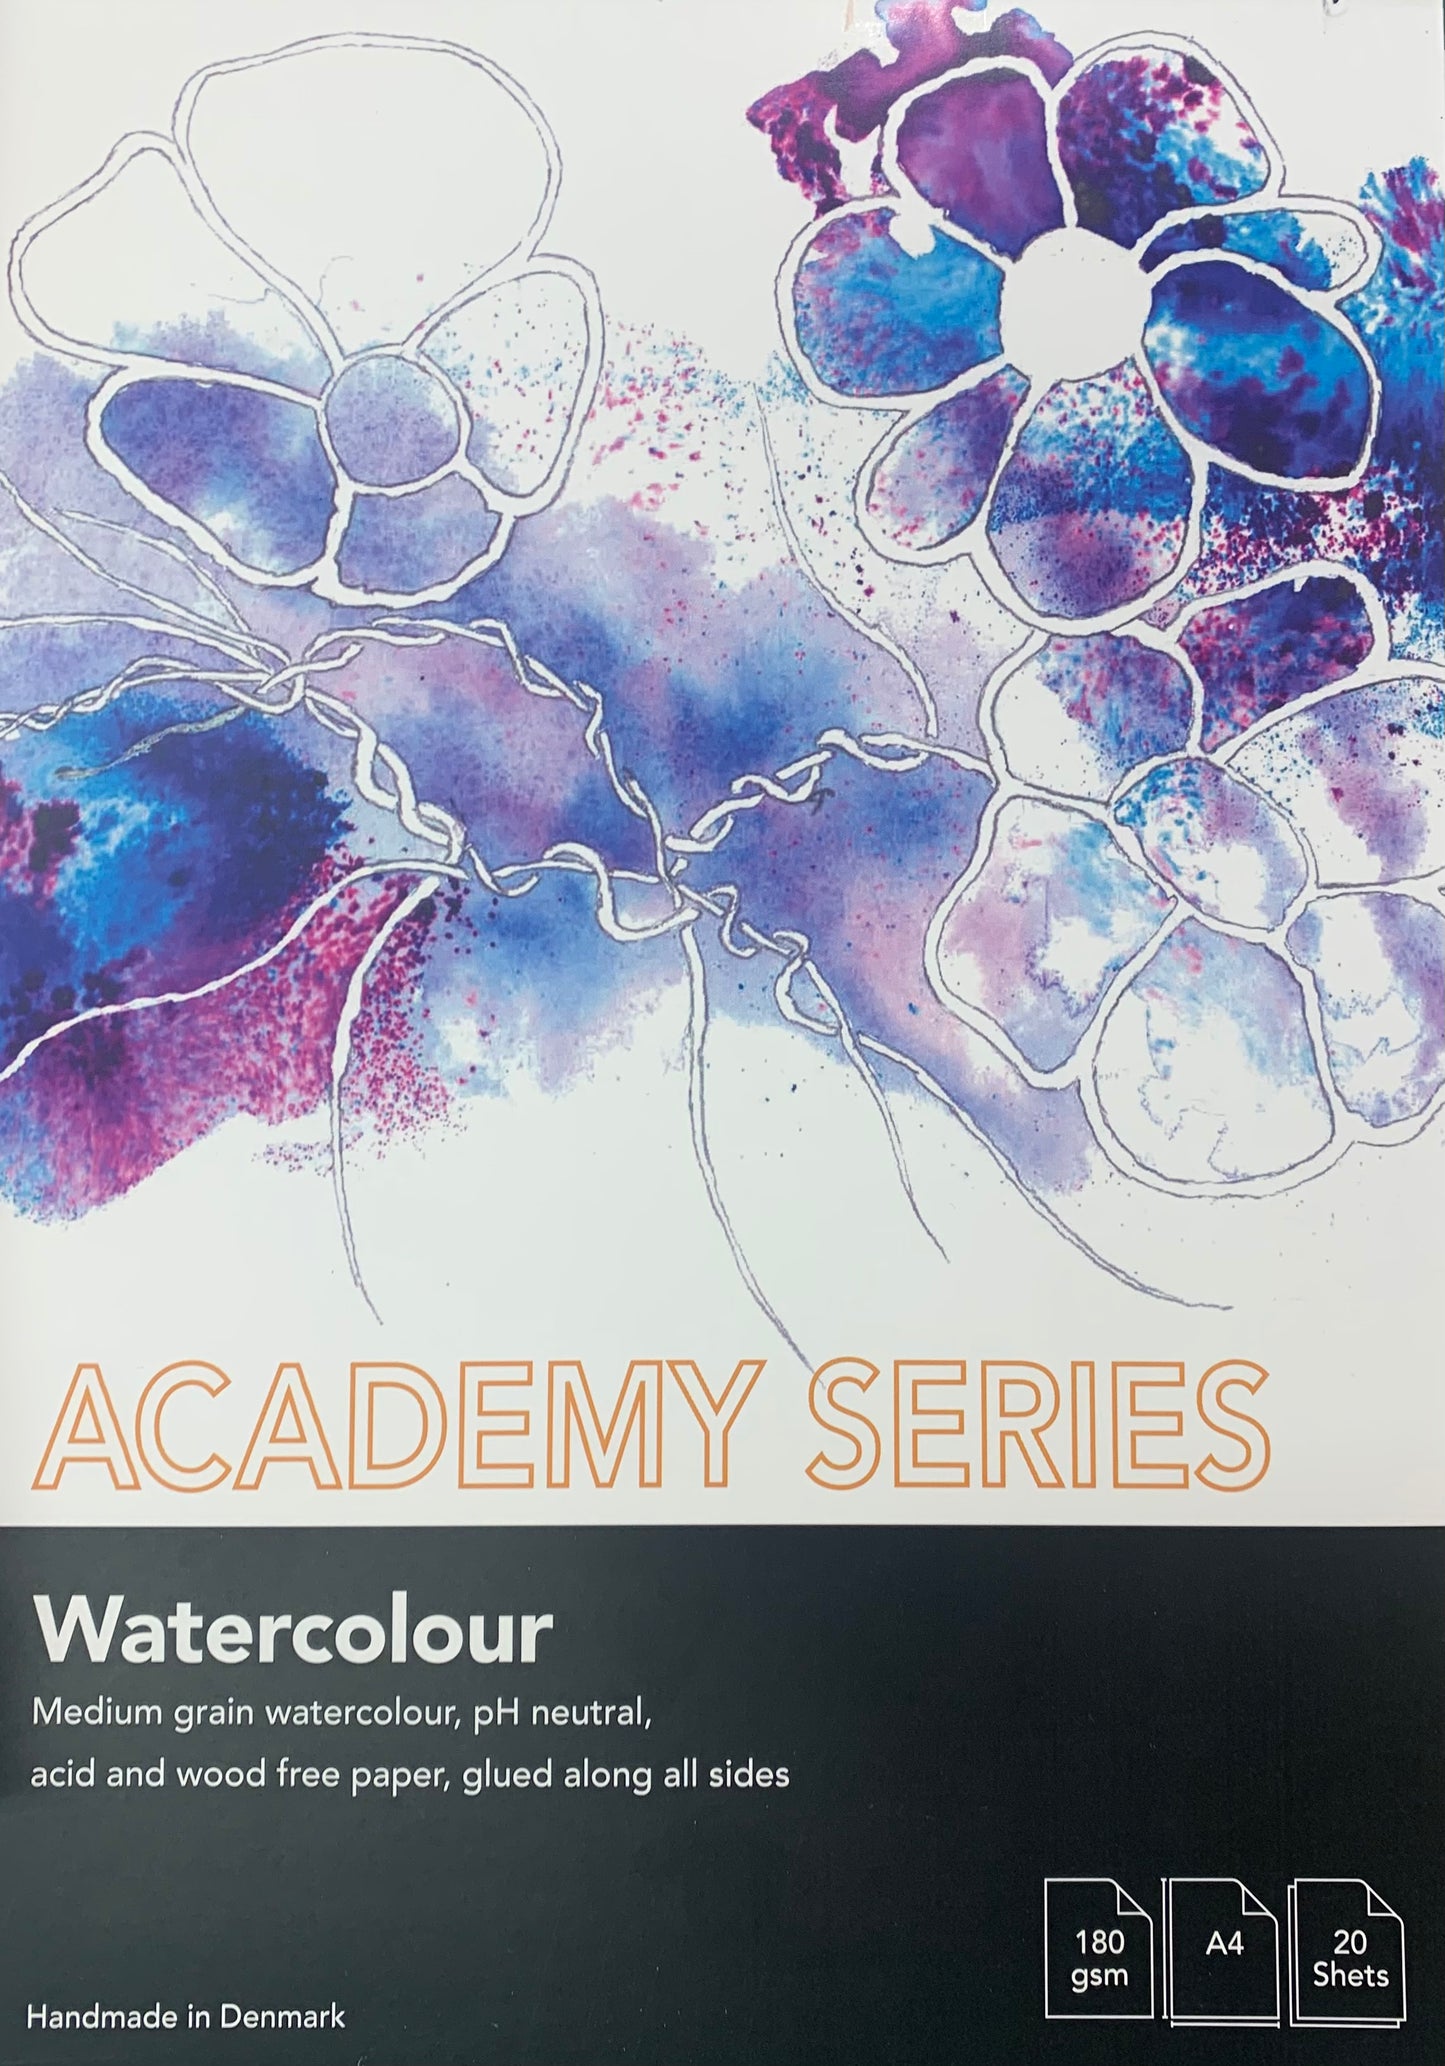 Academy series - Watercolor paper - vannfarge blokk - 180 gsm , A4 , 20 sheets